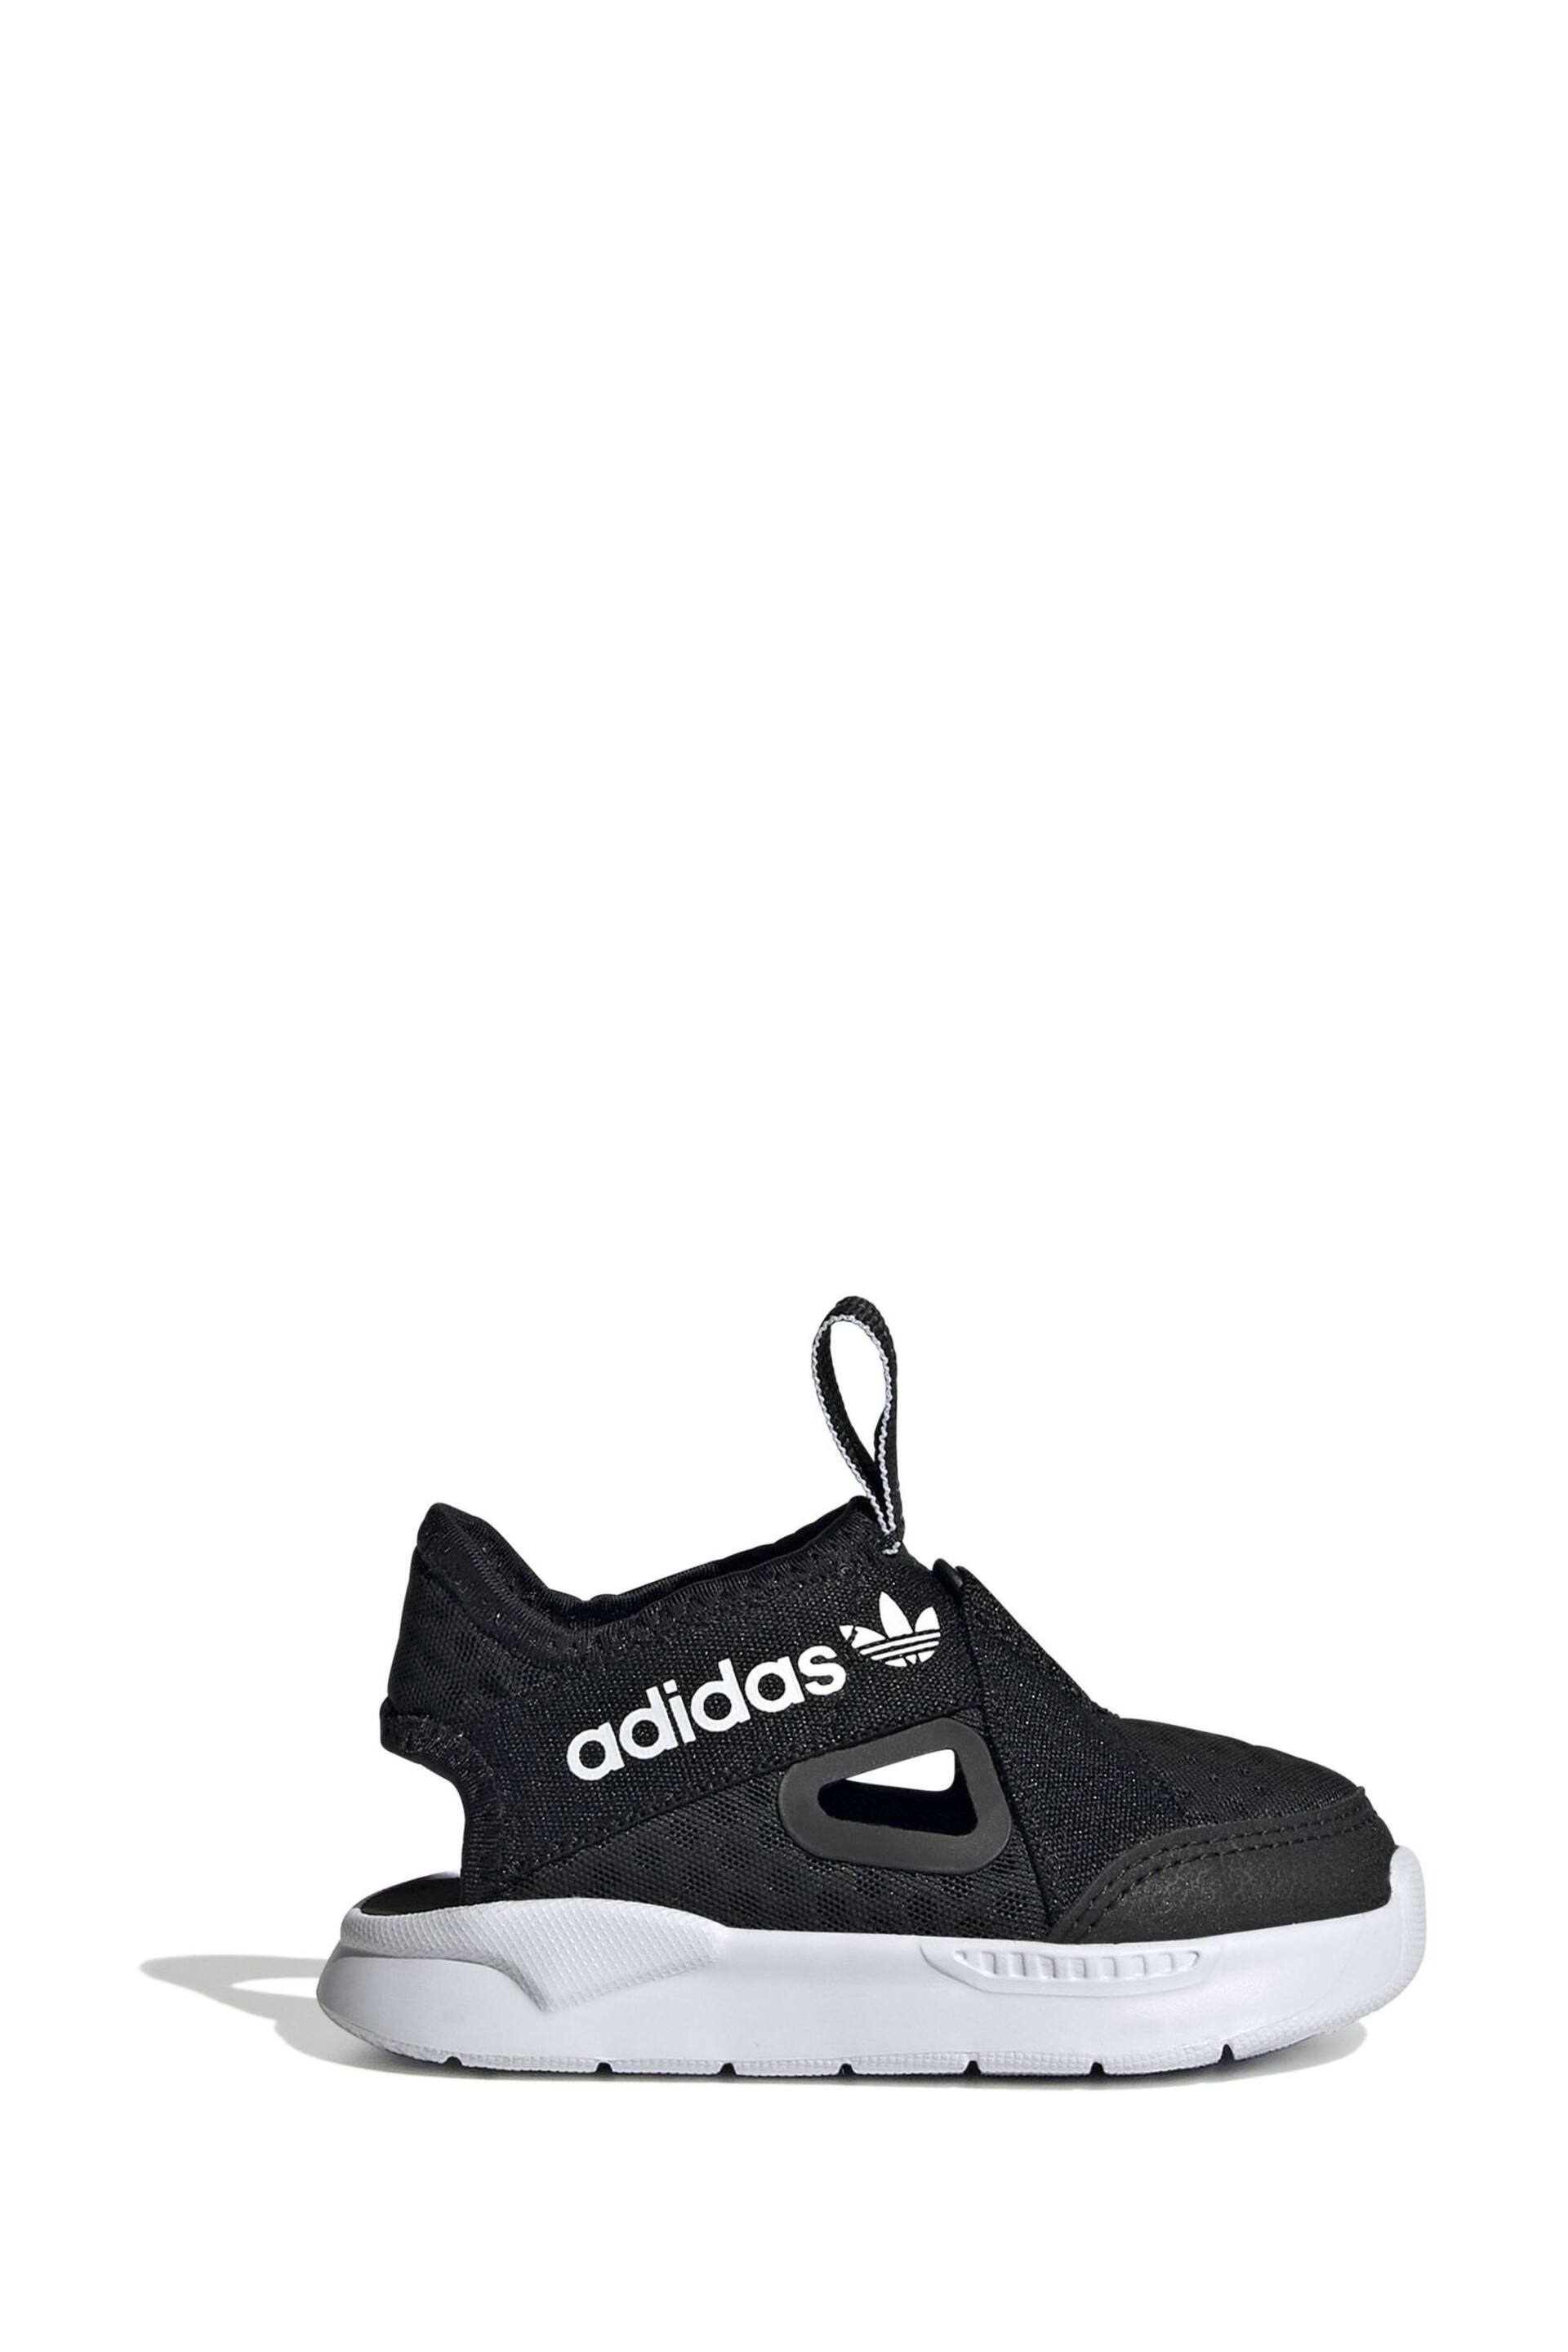 adidas Originals 360 Infant Black Sandals - Image 1 of 8